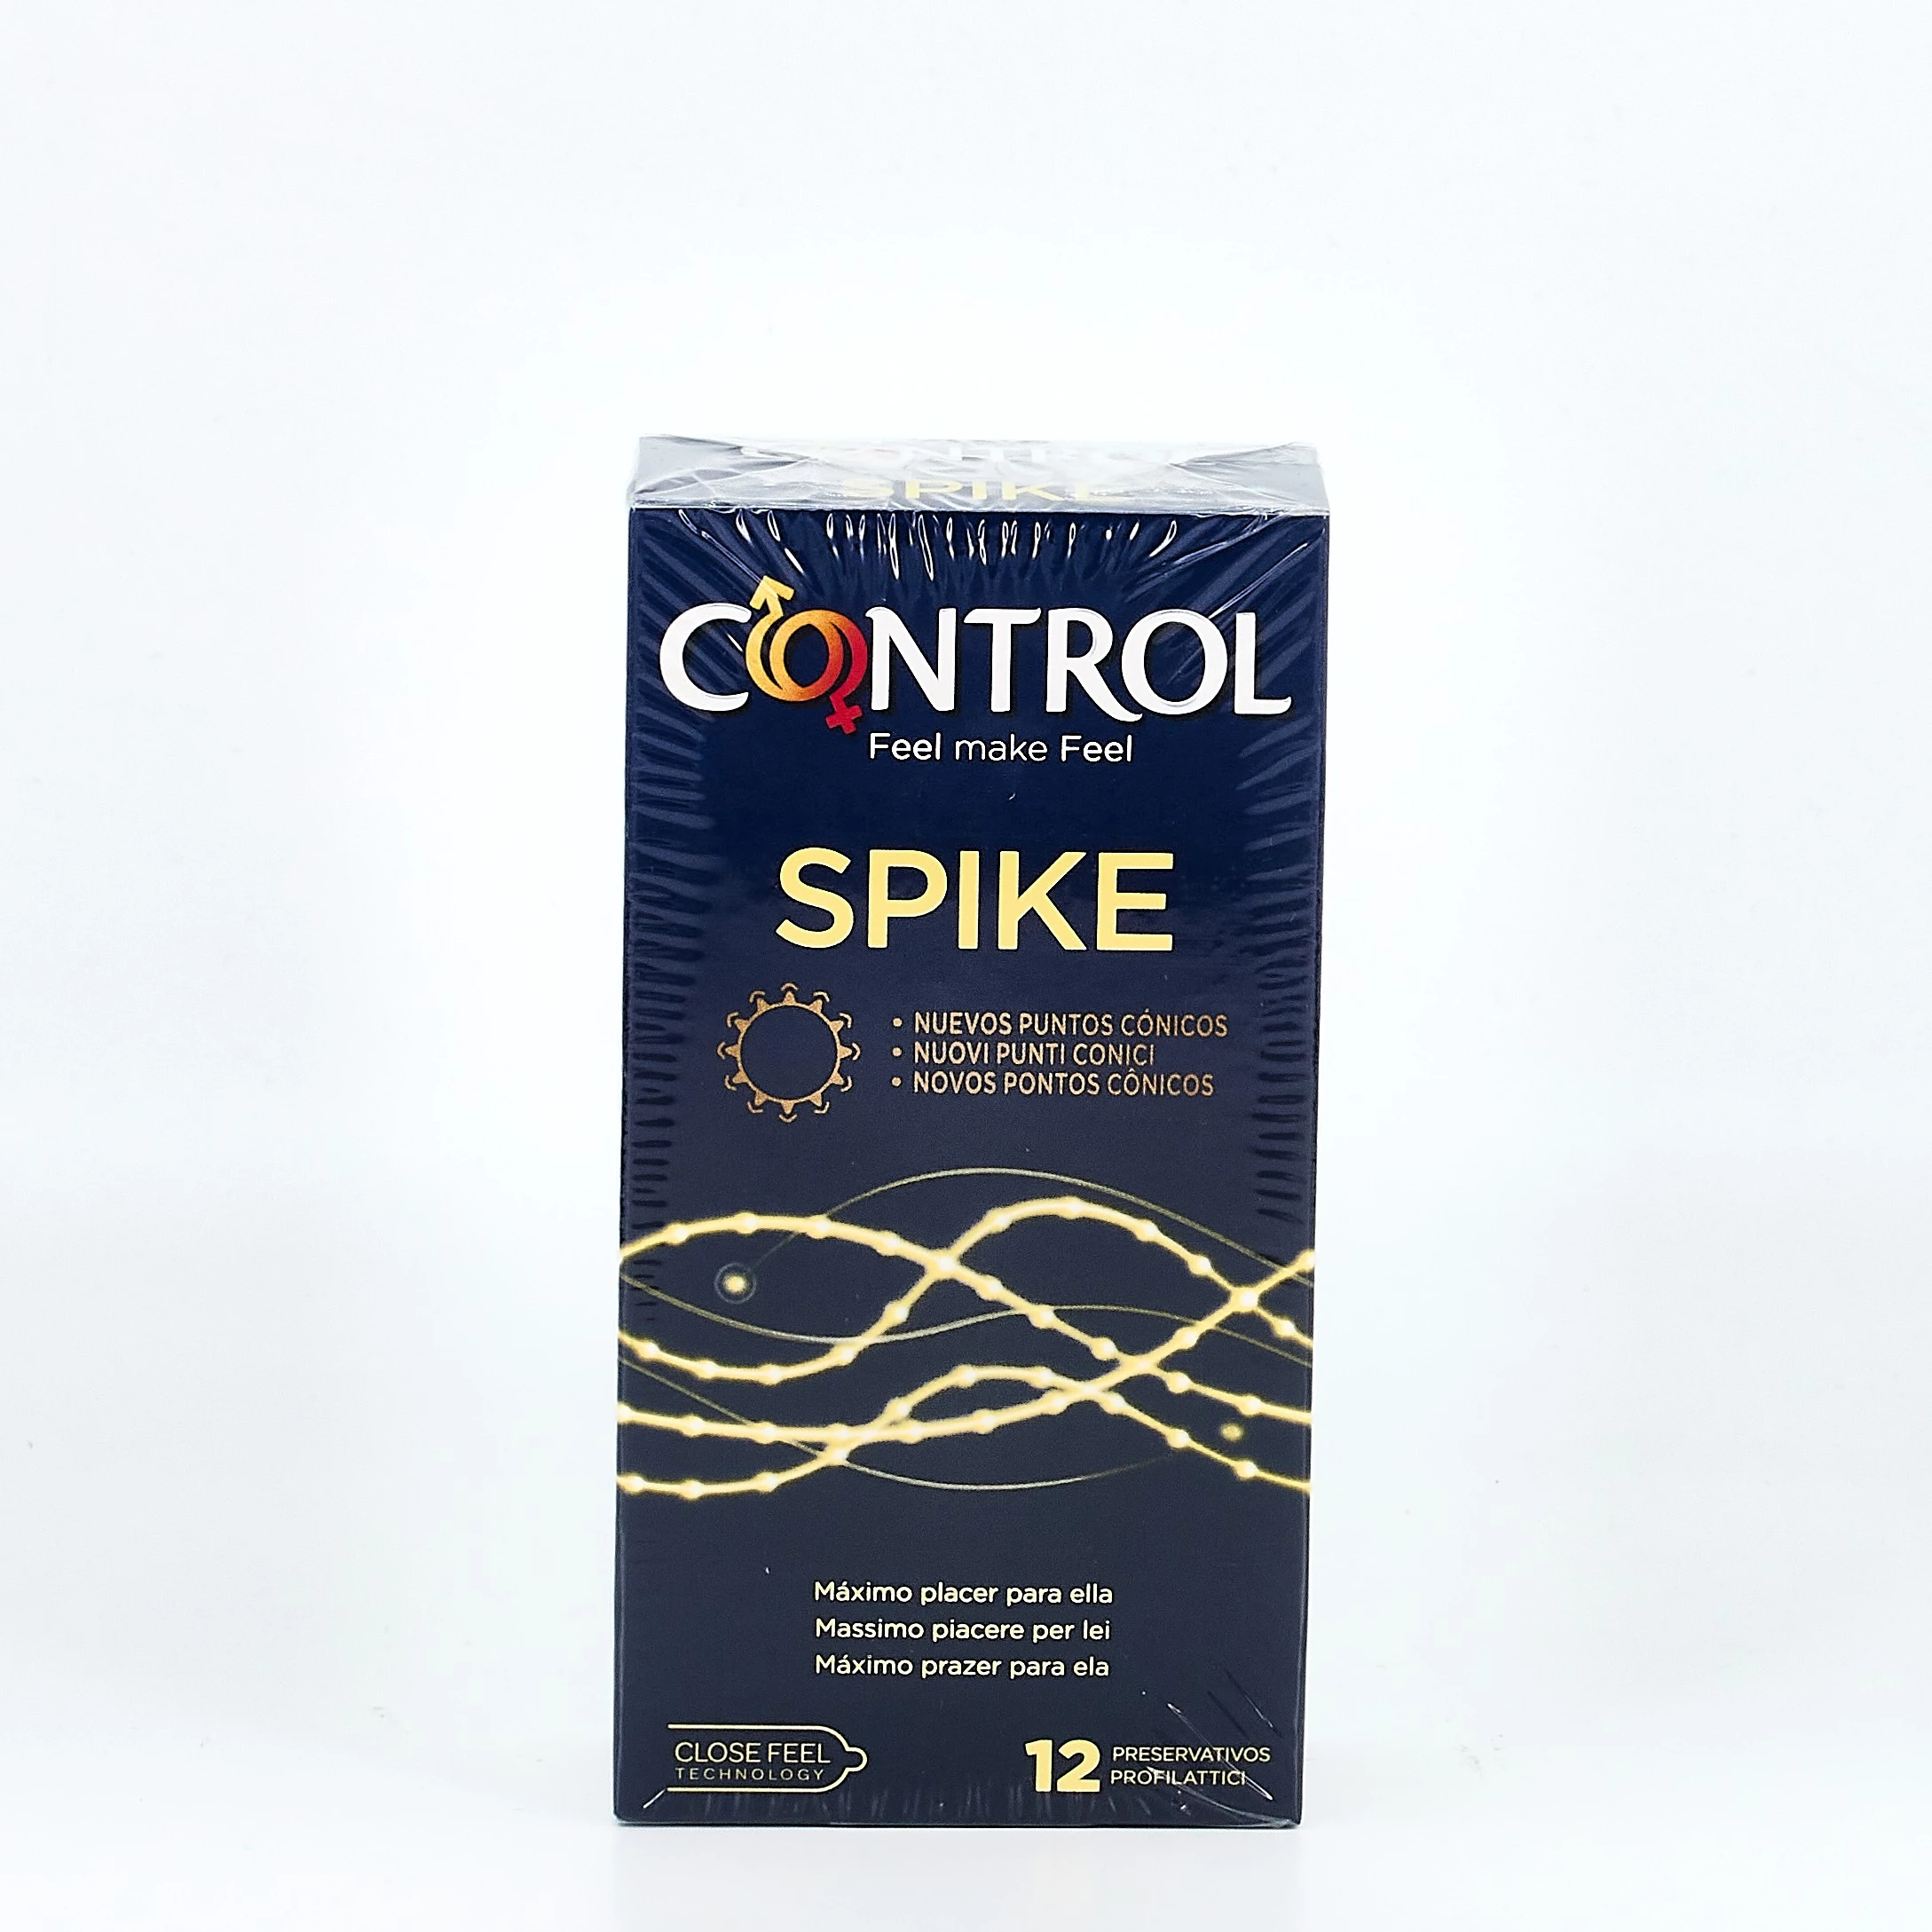 Control Spike, 12 Preservativos.